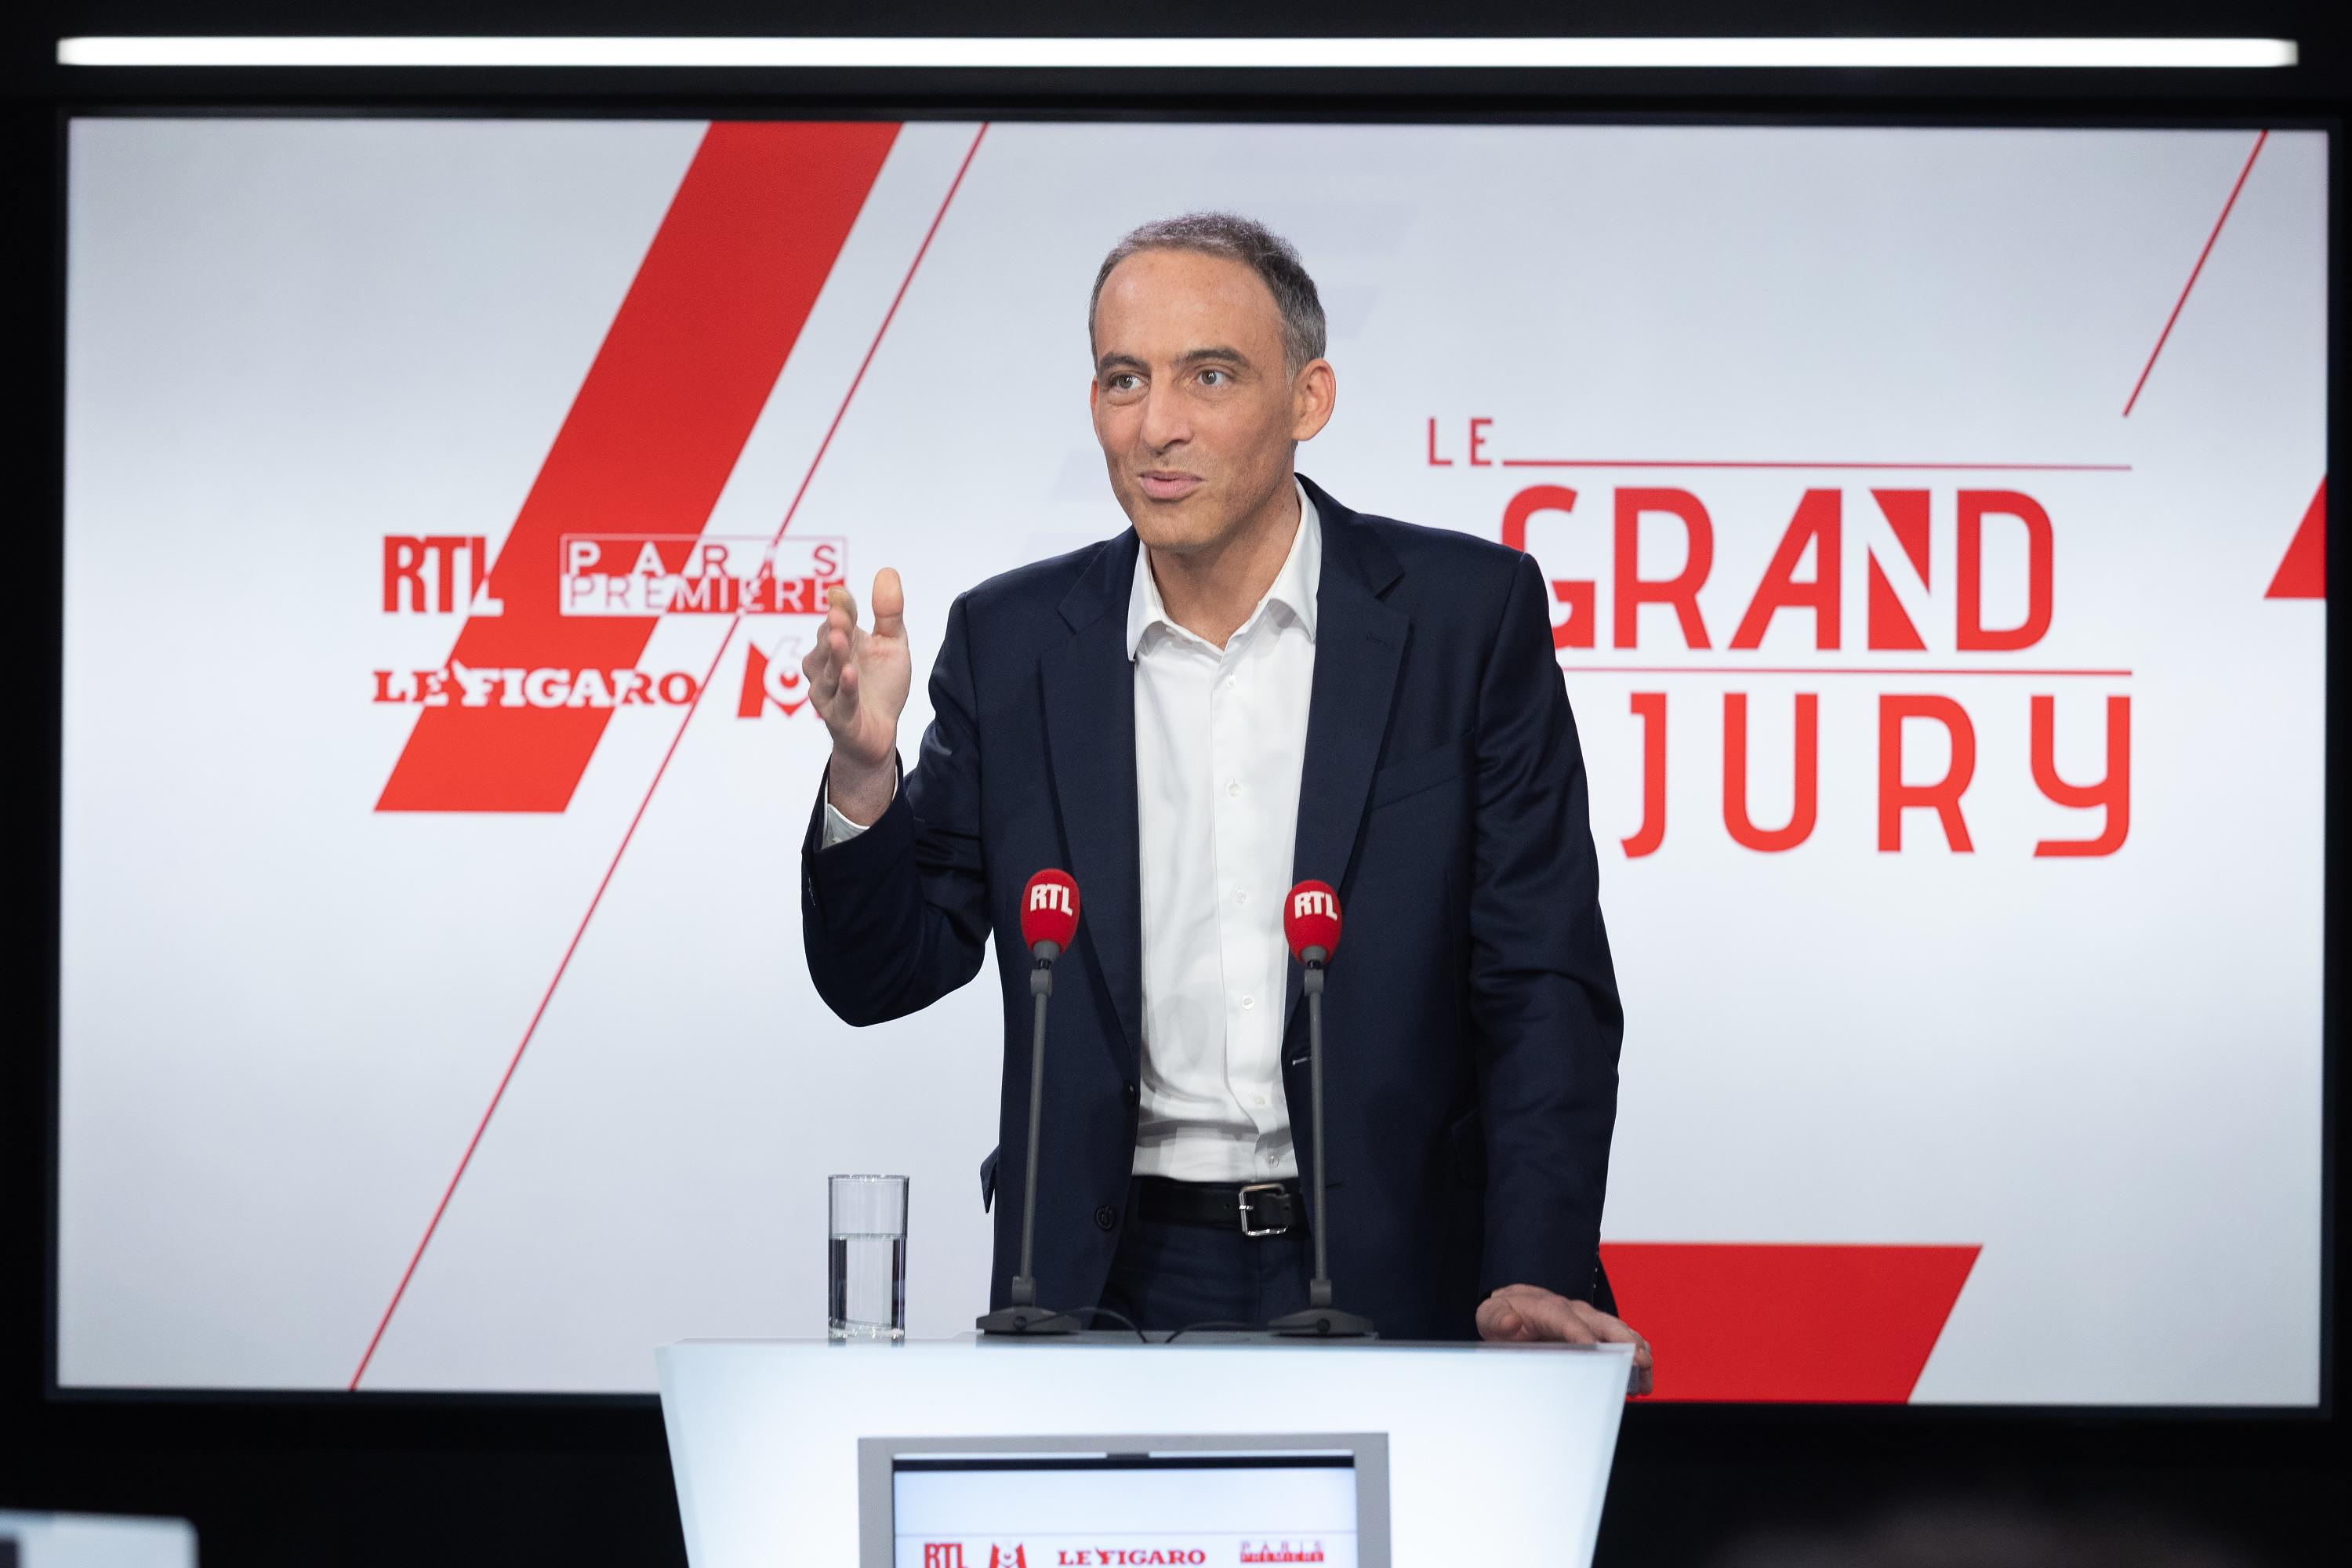 Europeans: Glucksmann denounces “Emmanuel Macron’s failure” in the face of Bardella’s success